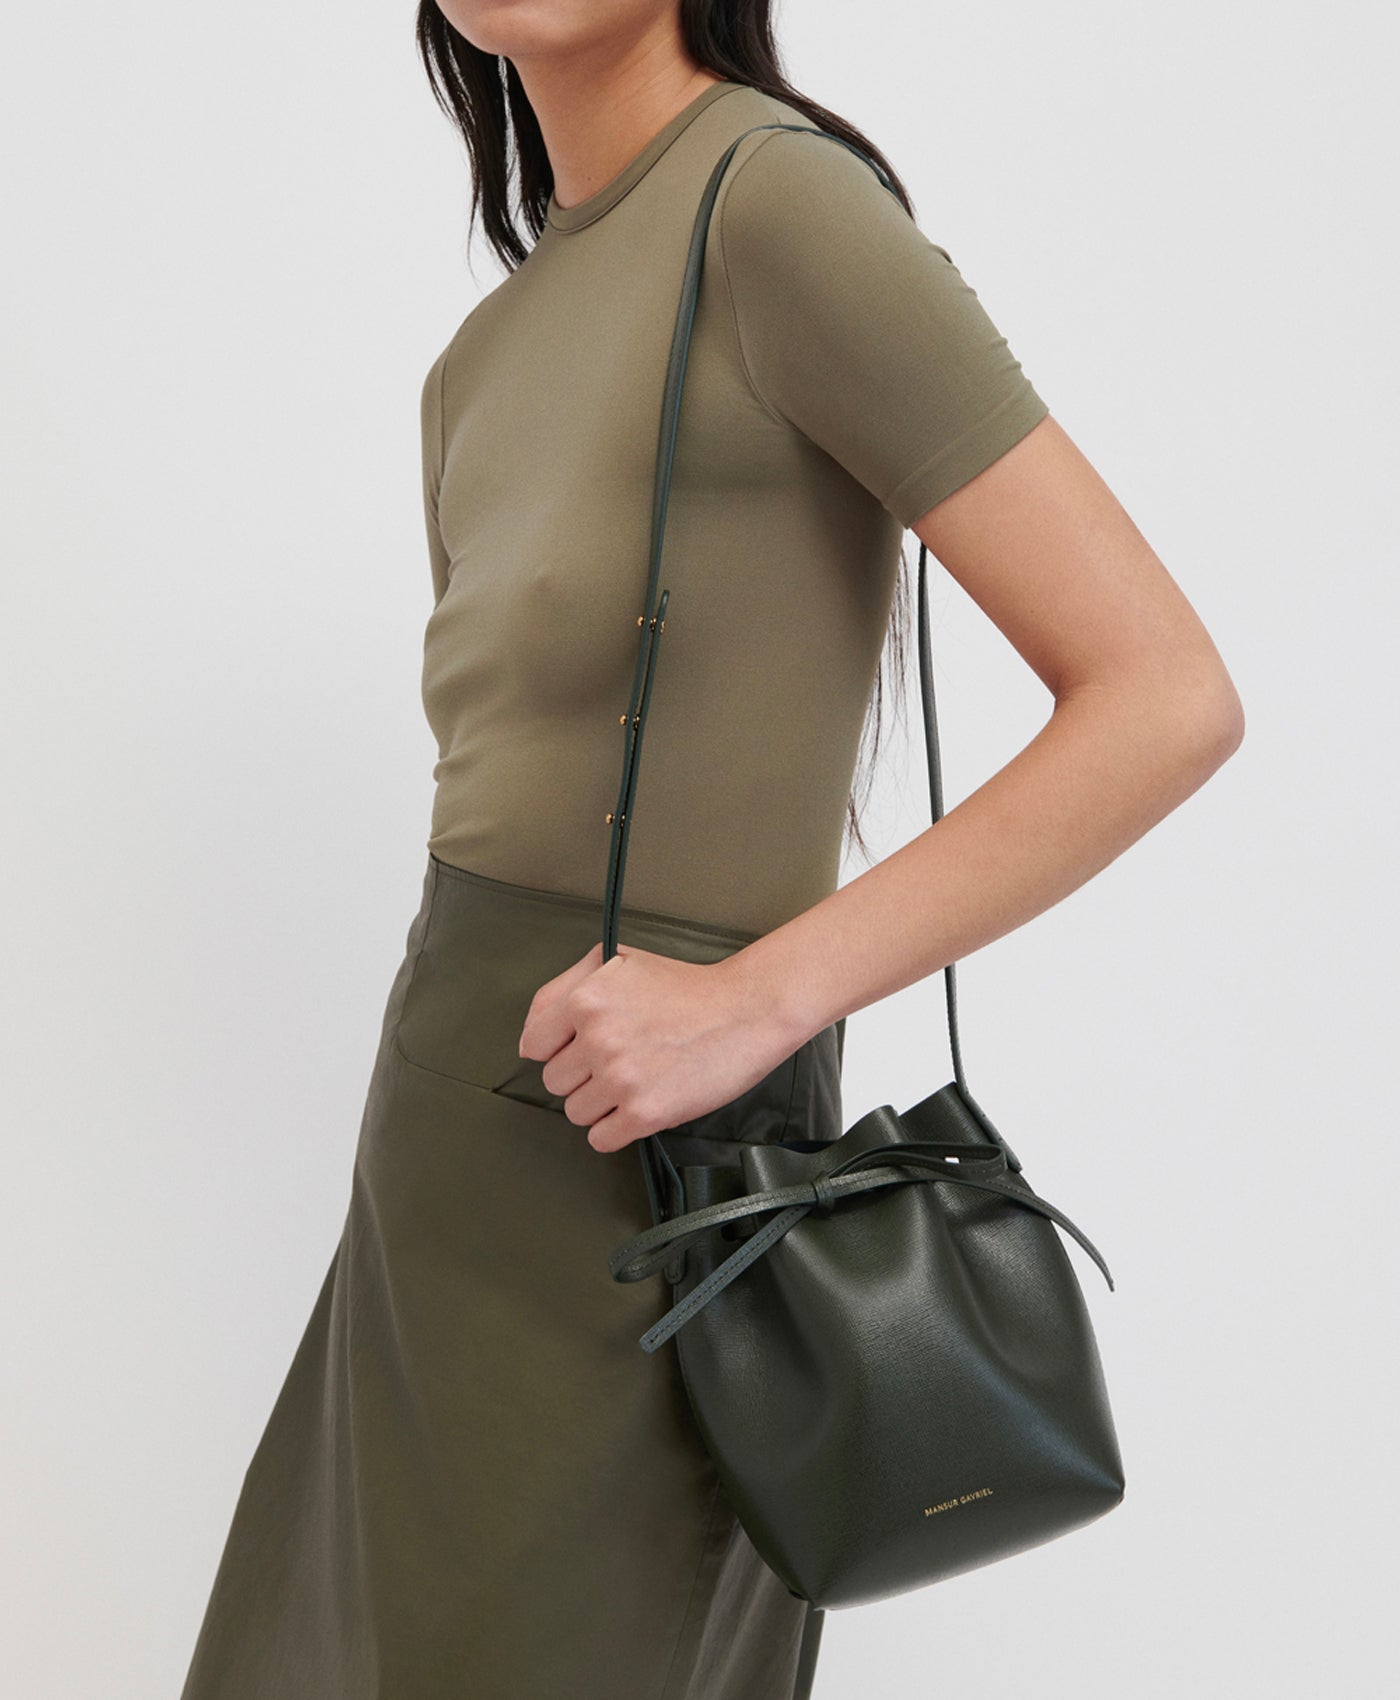 selling designer : r/handbags